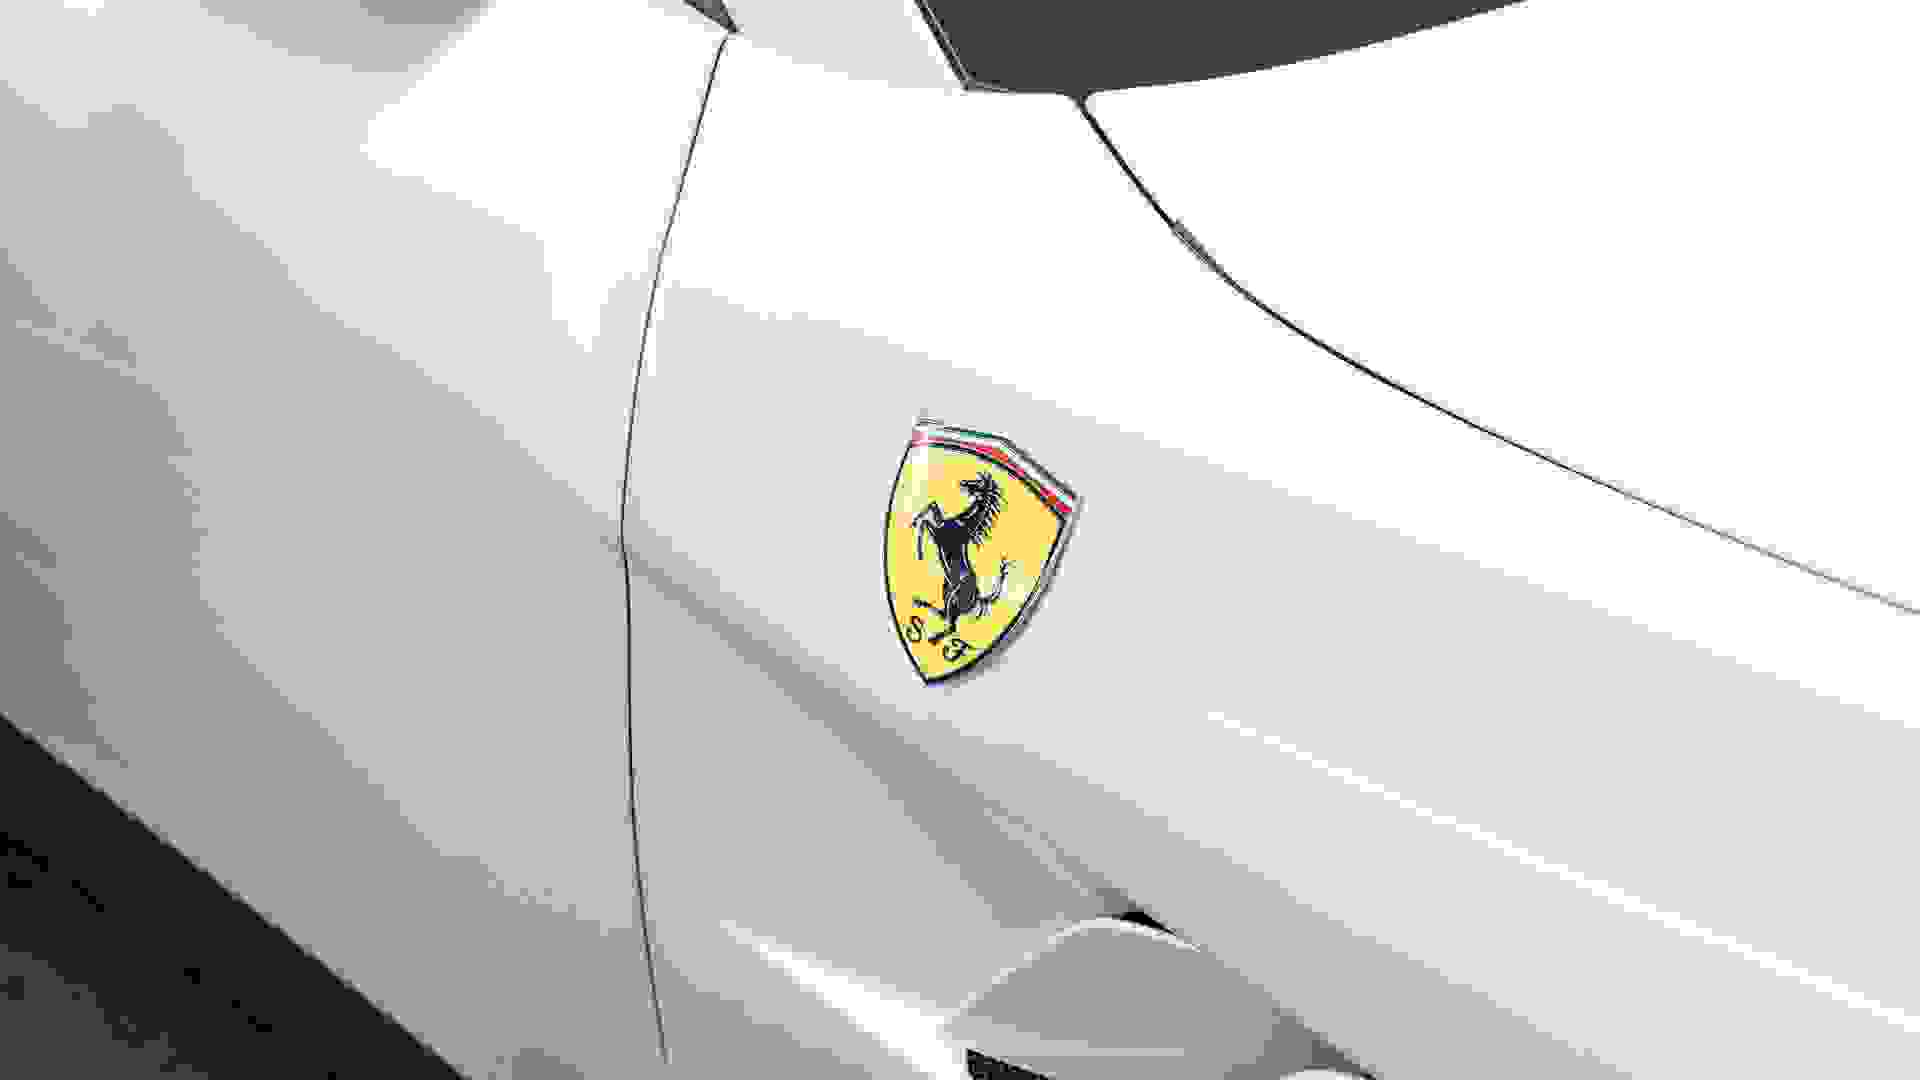 Ferrari GTC4 Lusso Photo 264c47d5-129f-4bc6-9743-8778ade1f6a0.jpg